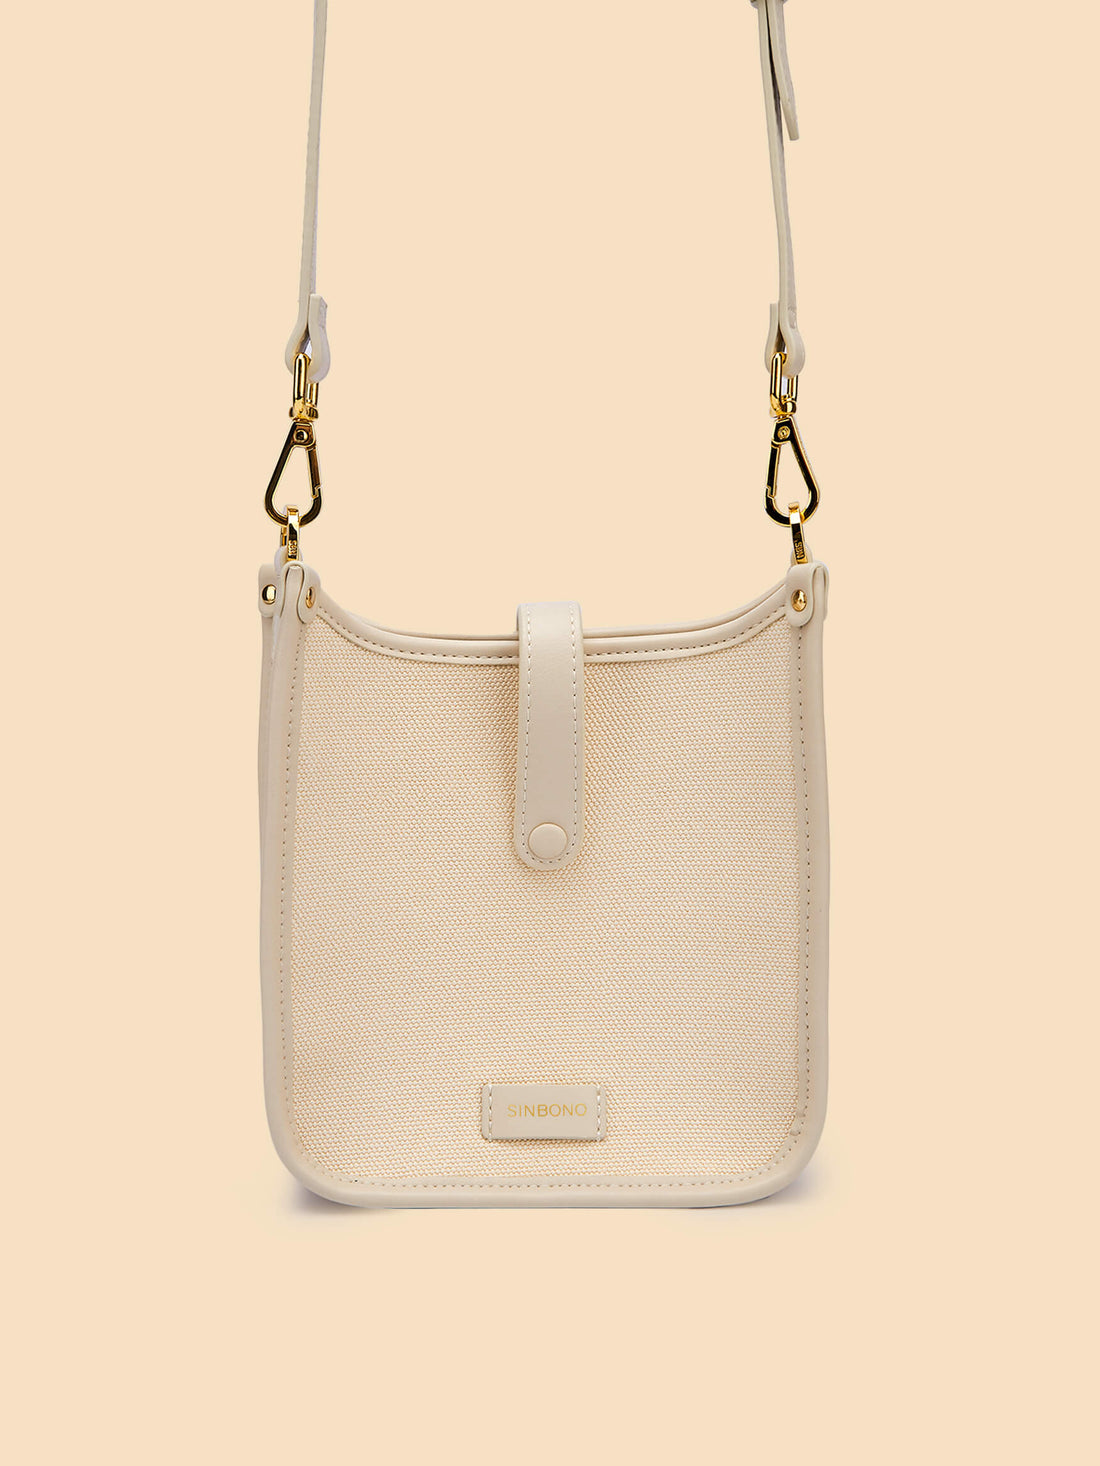 SINBONO Ivory Crossbody Bag- High-quality Soft Vegan Leather Bag